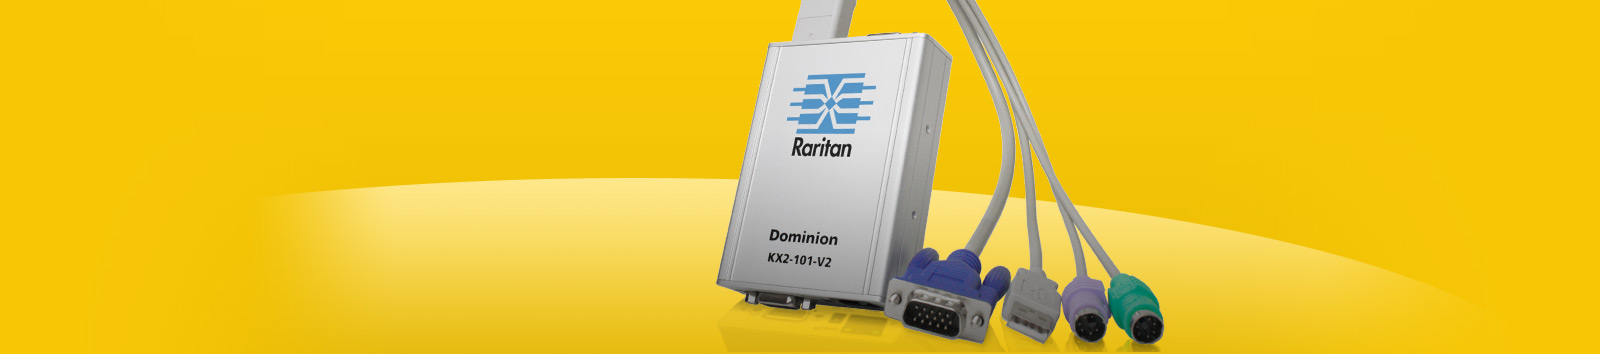 Raritan Dominion DKX2-101-V2 4 User 1 Port KVM Over IP KVM Gateway